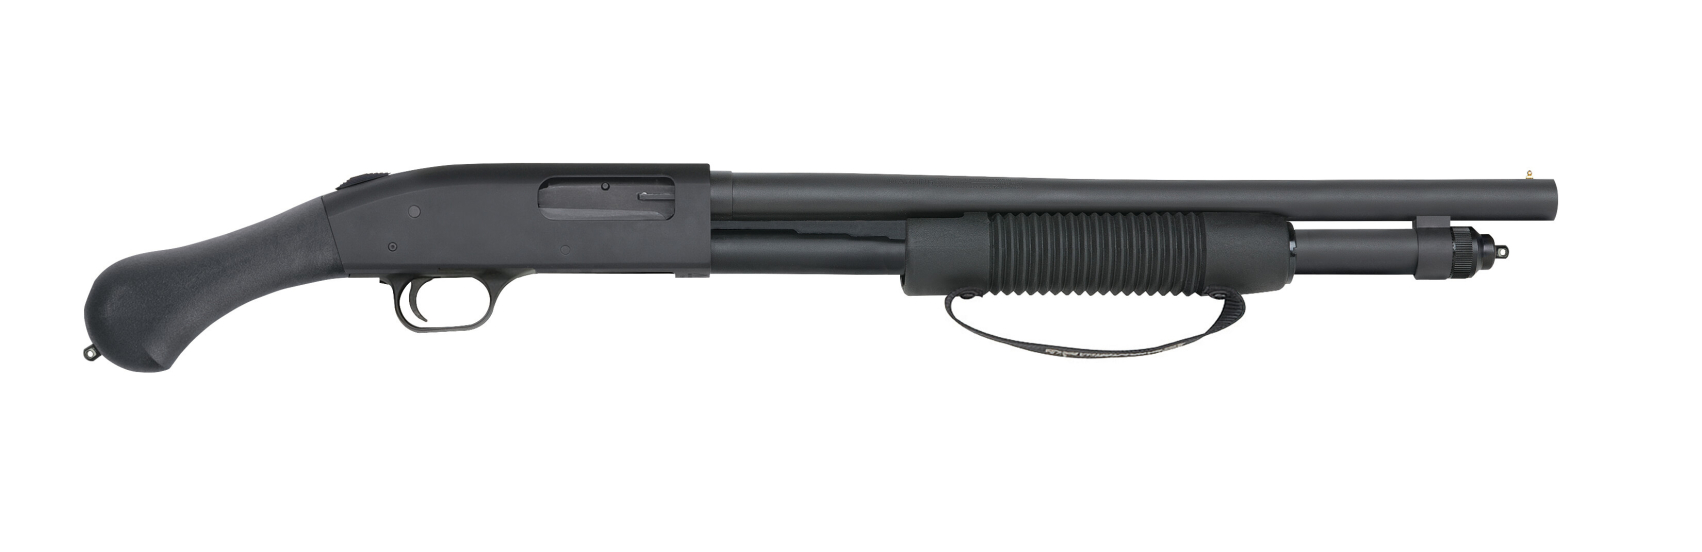 Mossberg 590 Pump-Action Shotgun